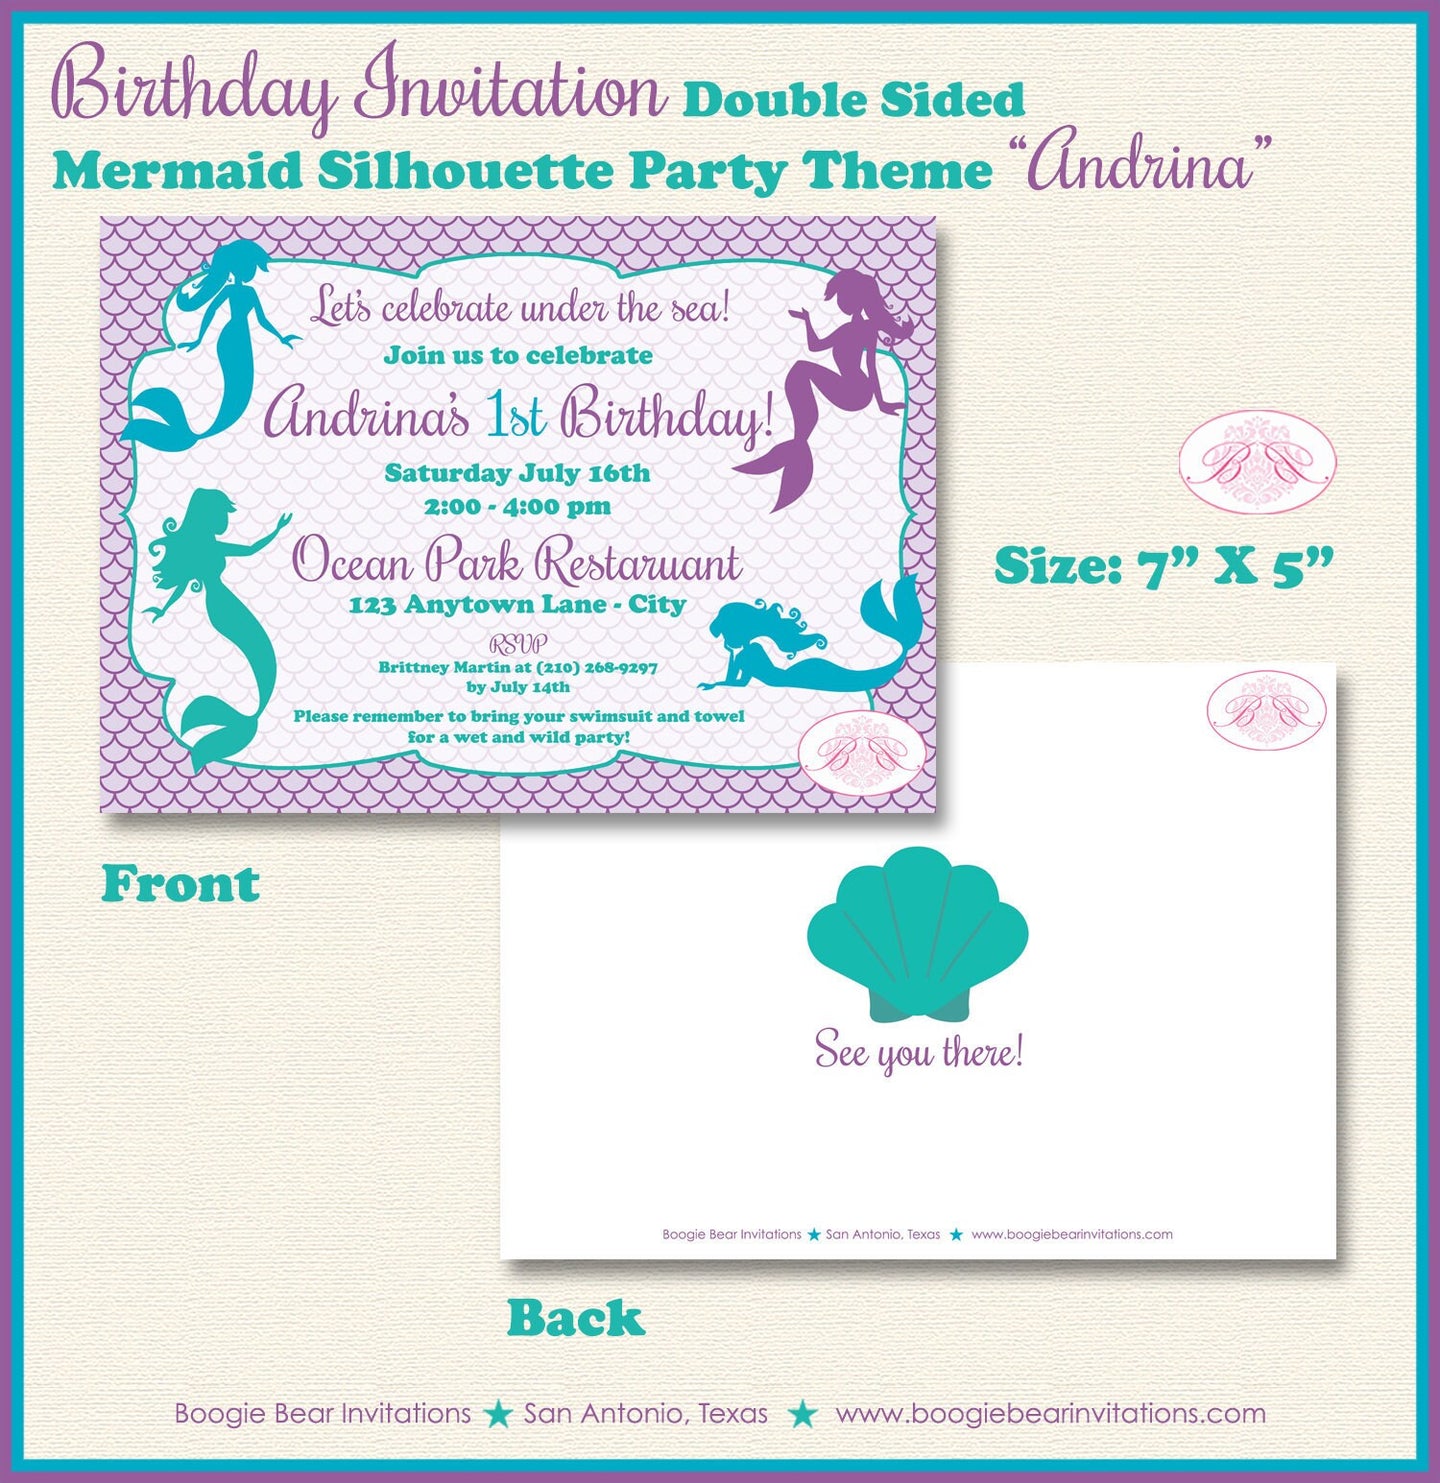 Mermaid Pool Birthday Party Invitation Purple Teal Ocean Beach Swimming Boogie Bear Invitations Andrina Theme Paperless Printable Printed